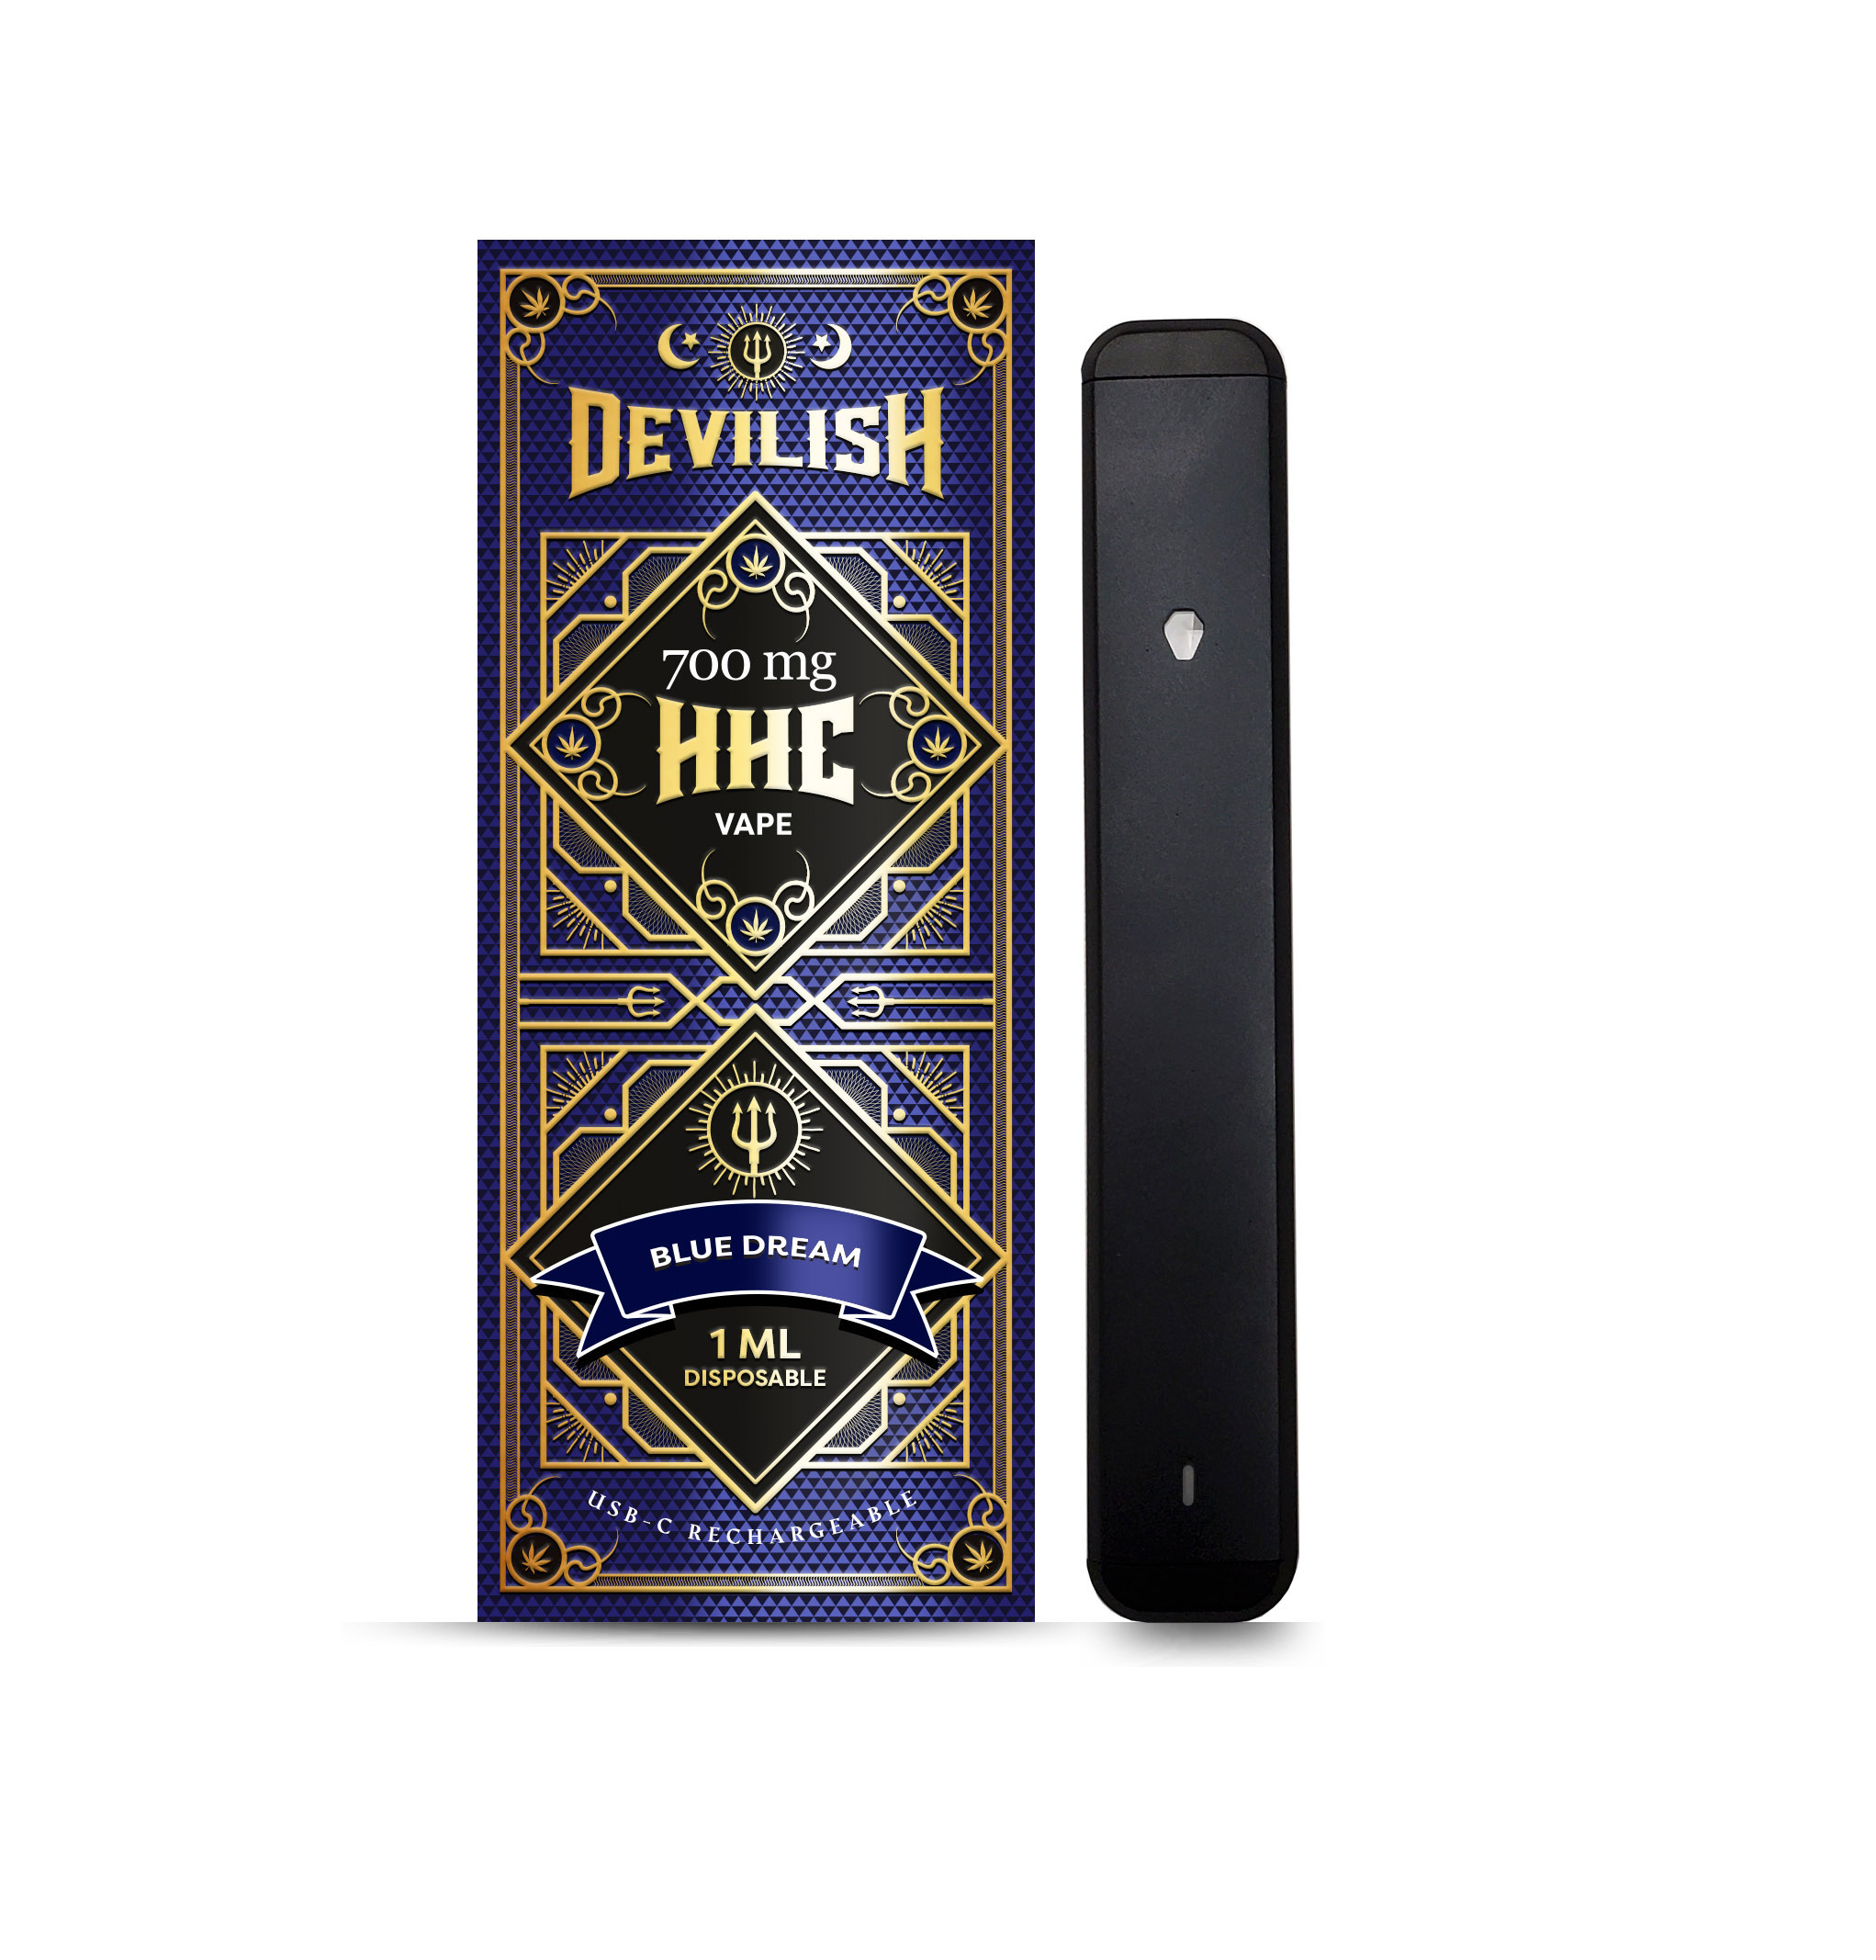 Devilish-700mg-HHC-Blue-Dream